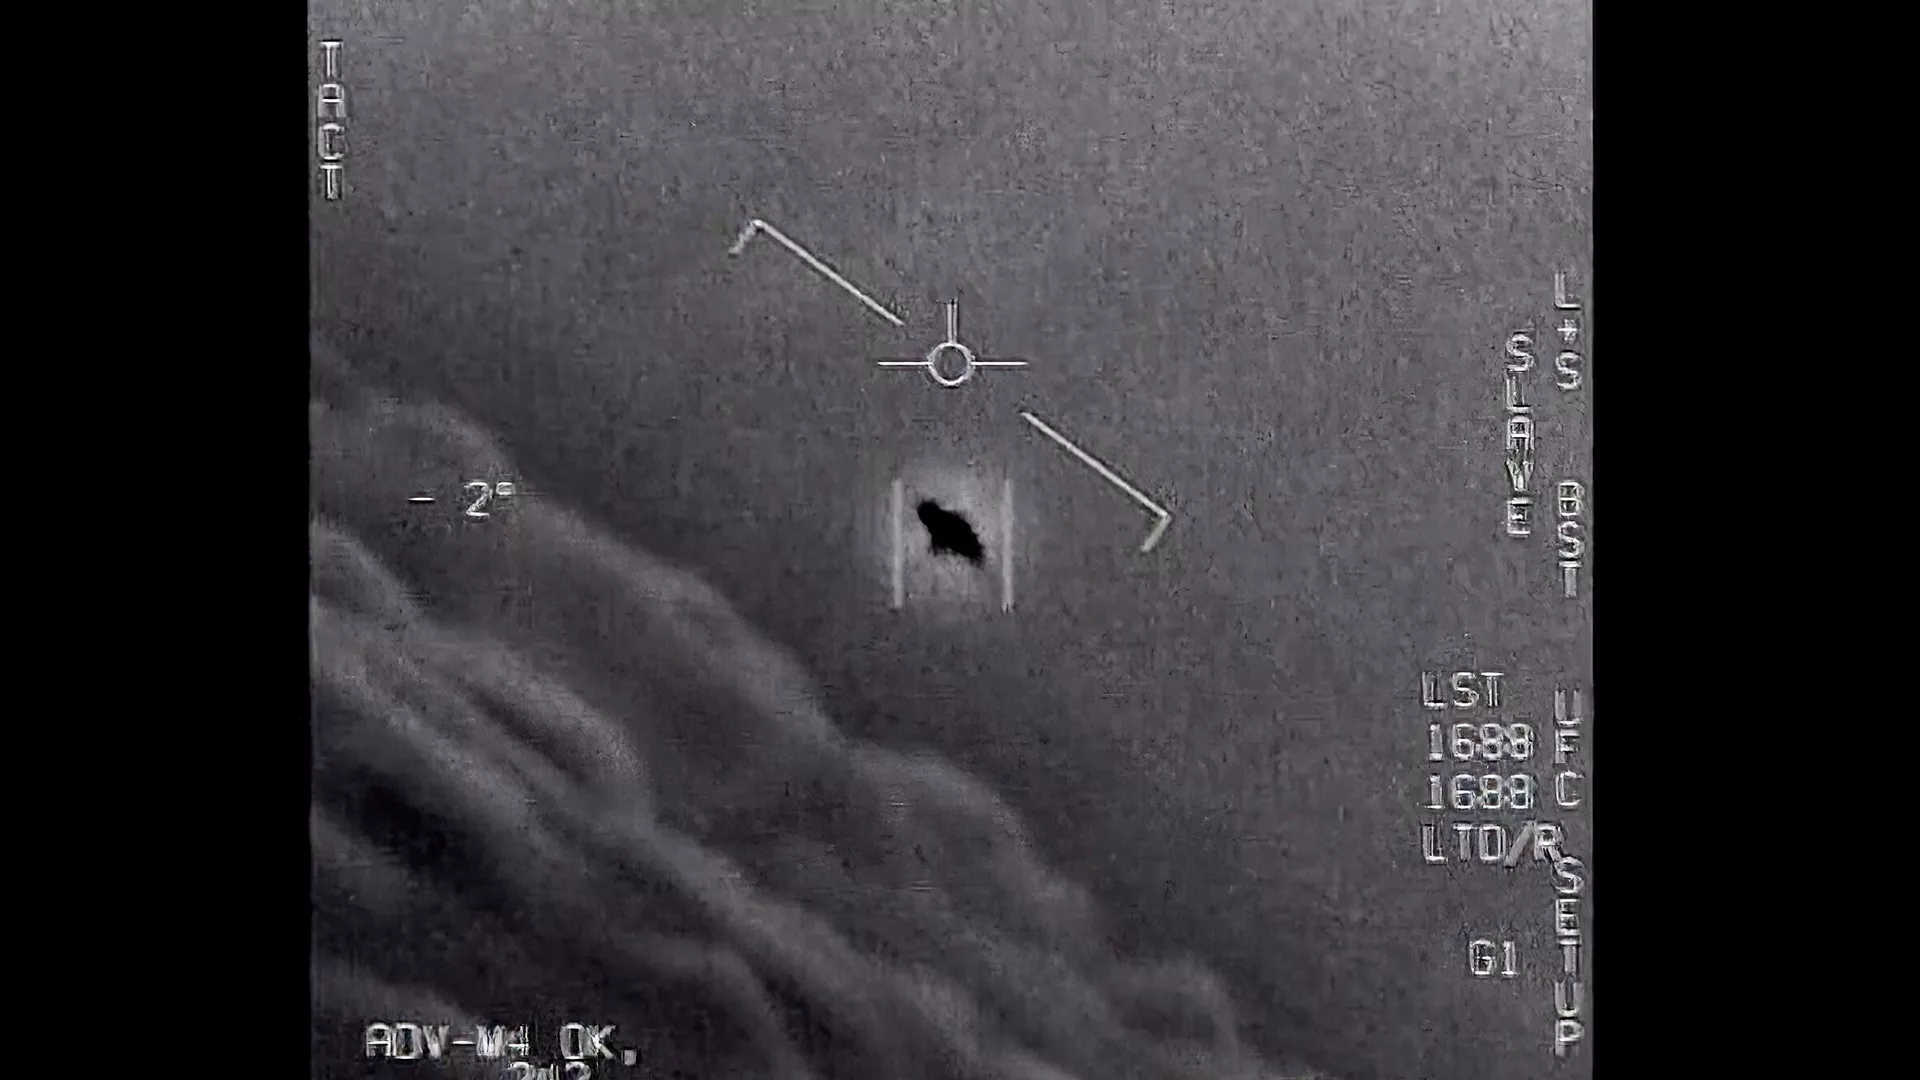 Congressional UFO Report news